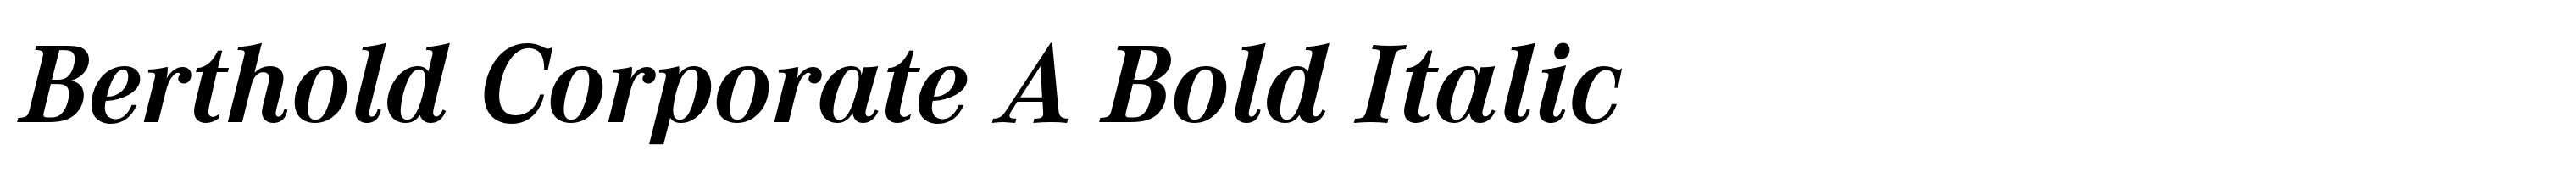 Berthold Corporate A Bold Italic